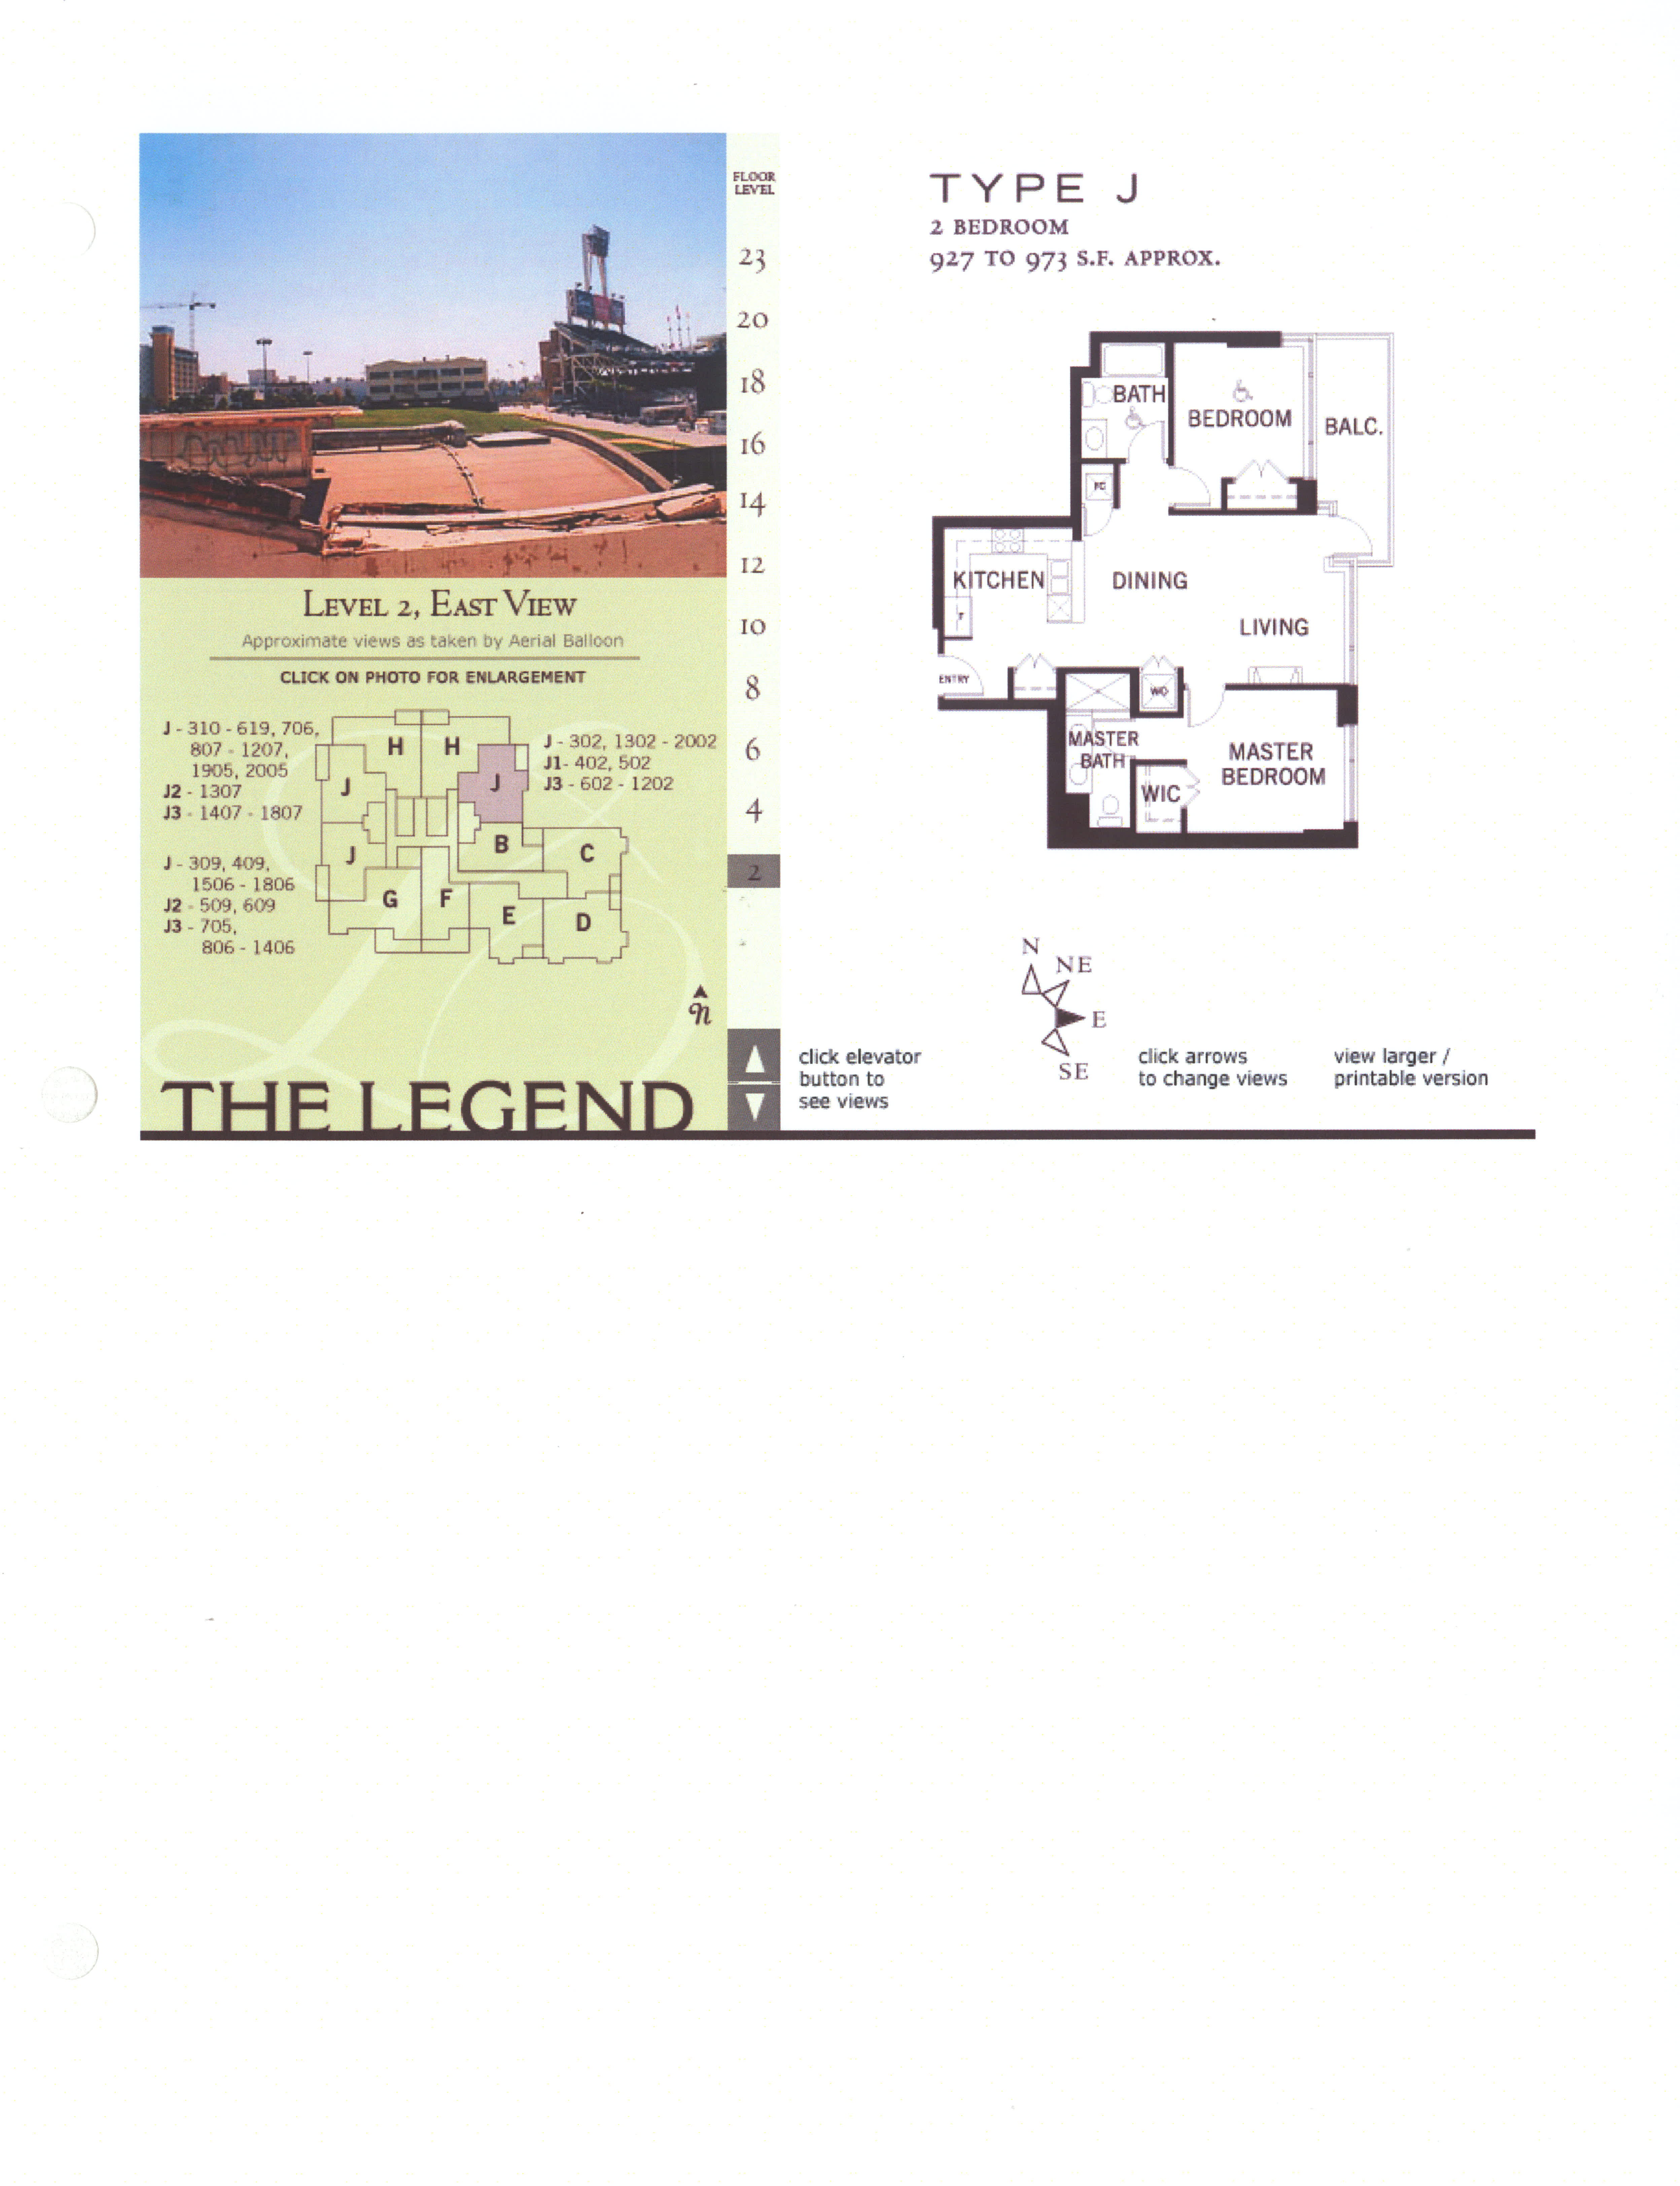 The Legend Floor Plan Level 2, East View – Type J